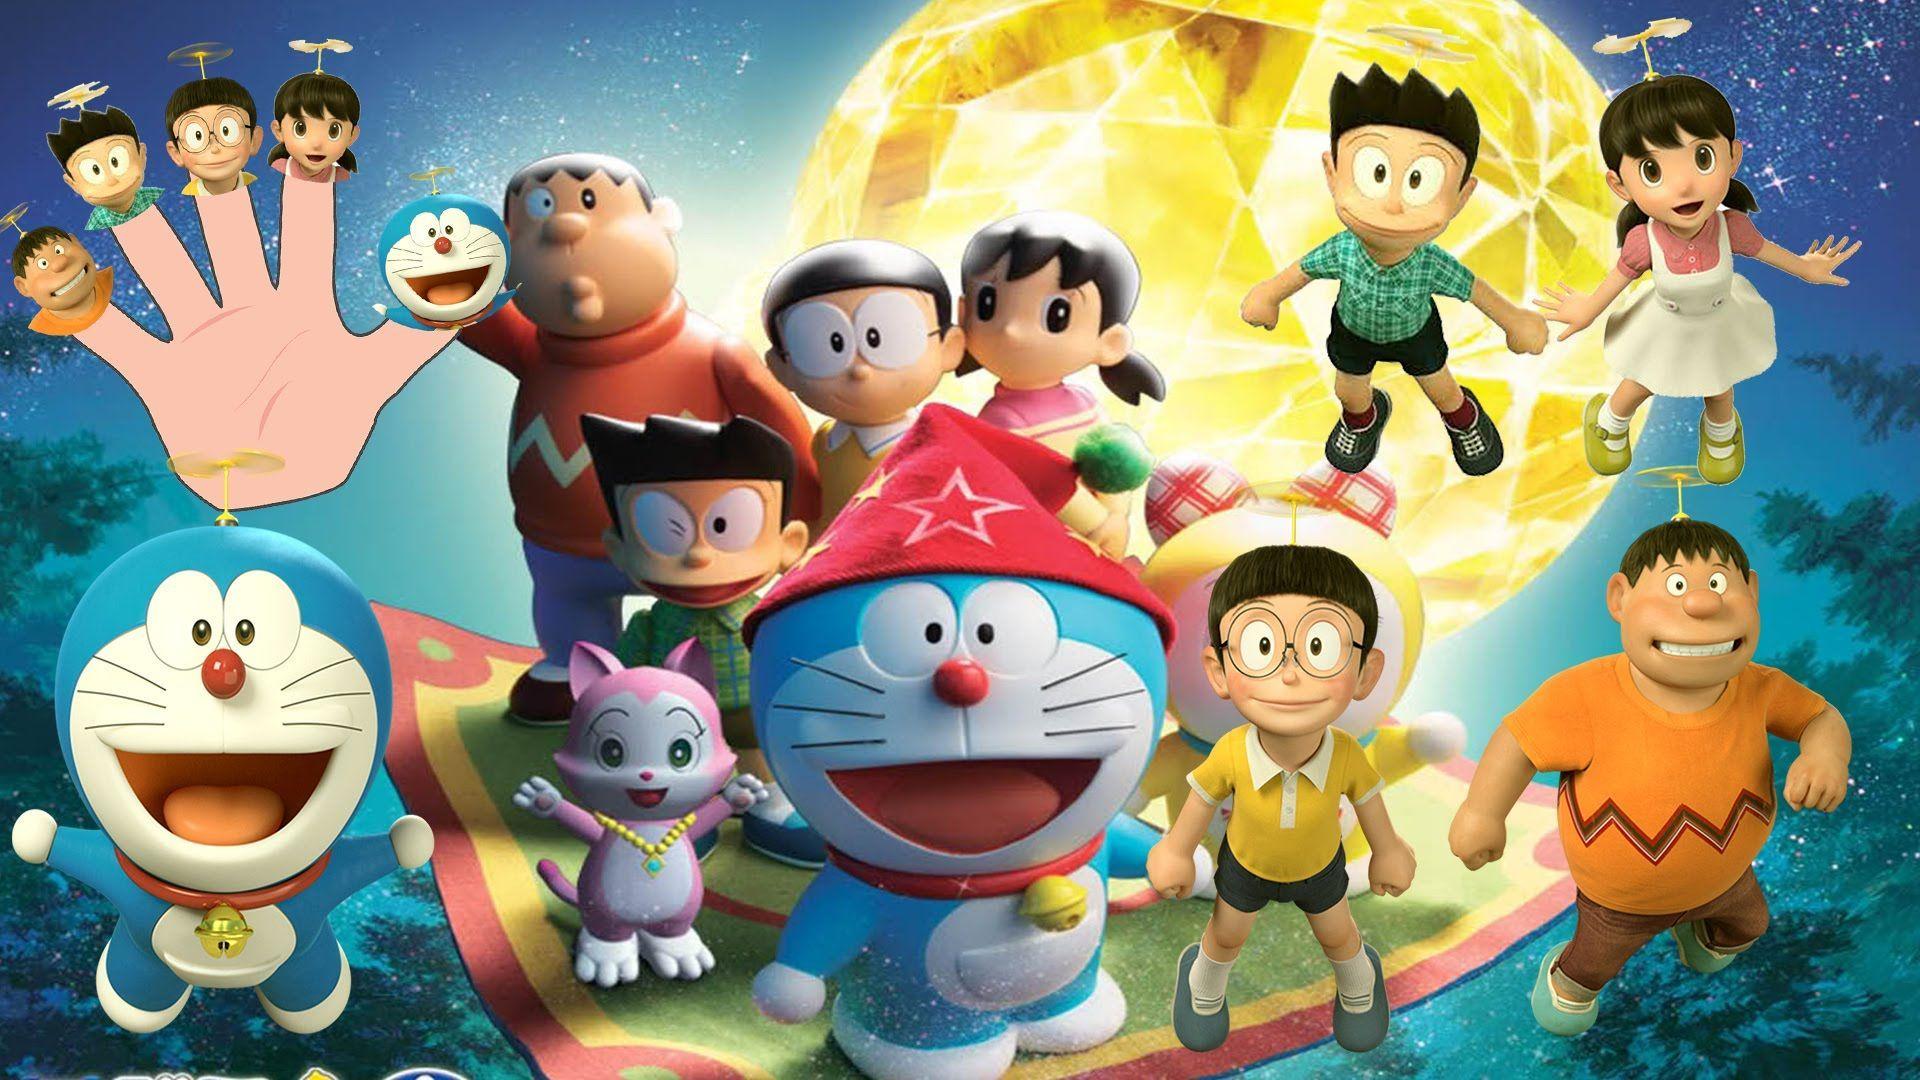 324 Doraemon Images Pinterest Cartoon Iphone Wallpaper Gambar Walpaper Laptop